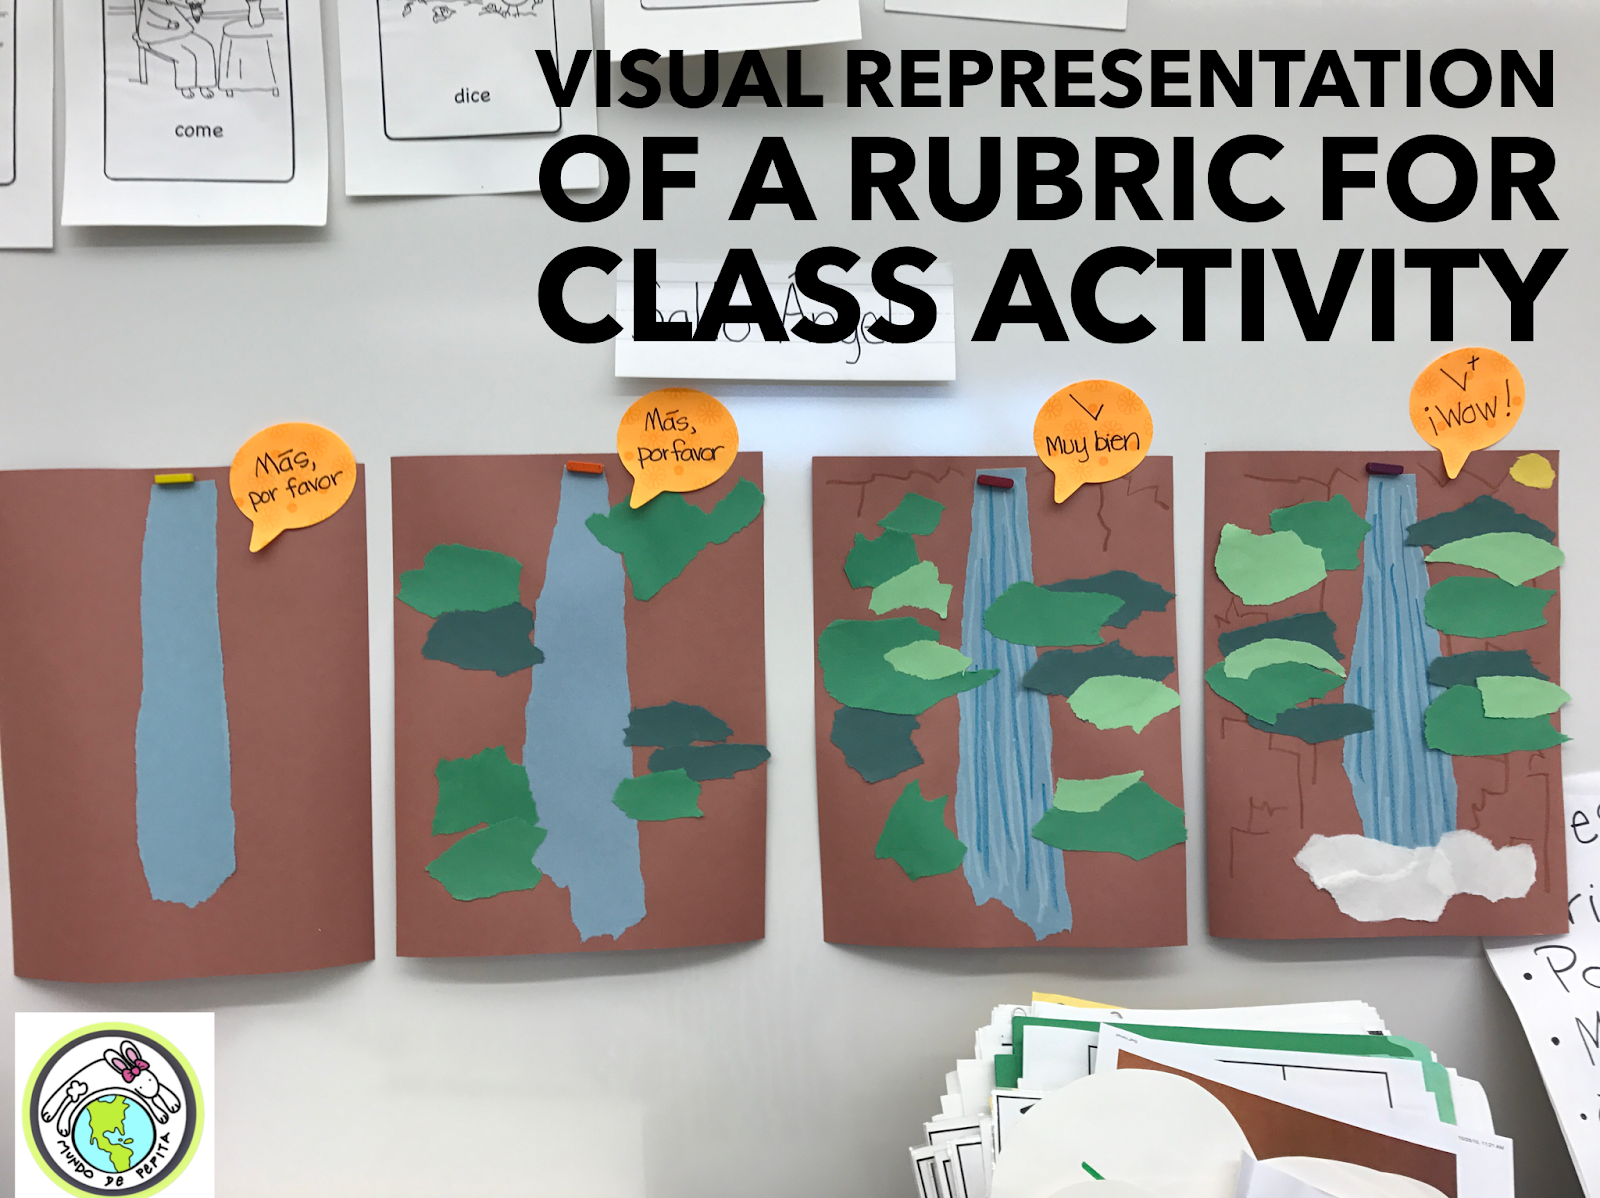 visual presentation rubrics